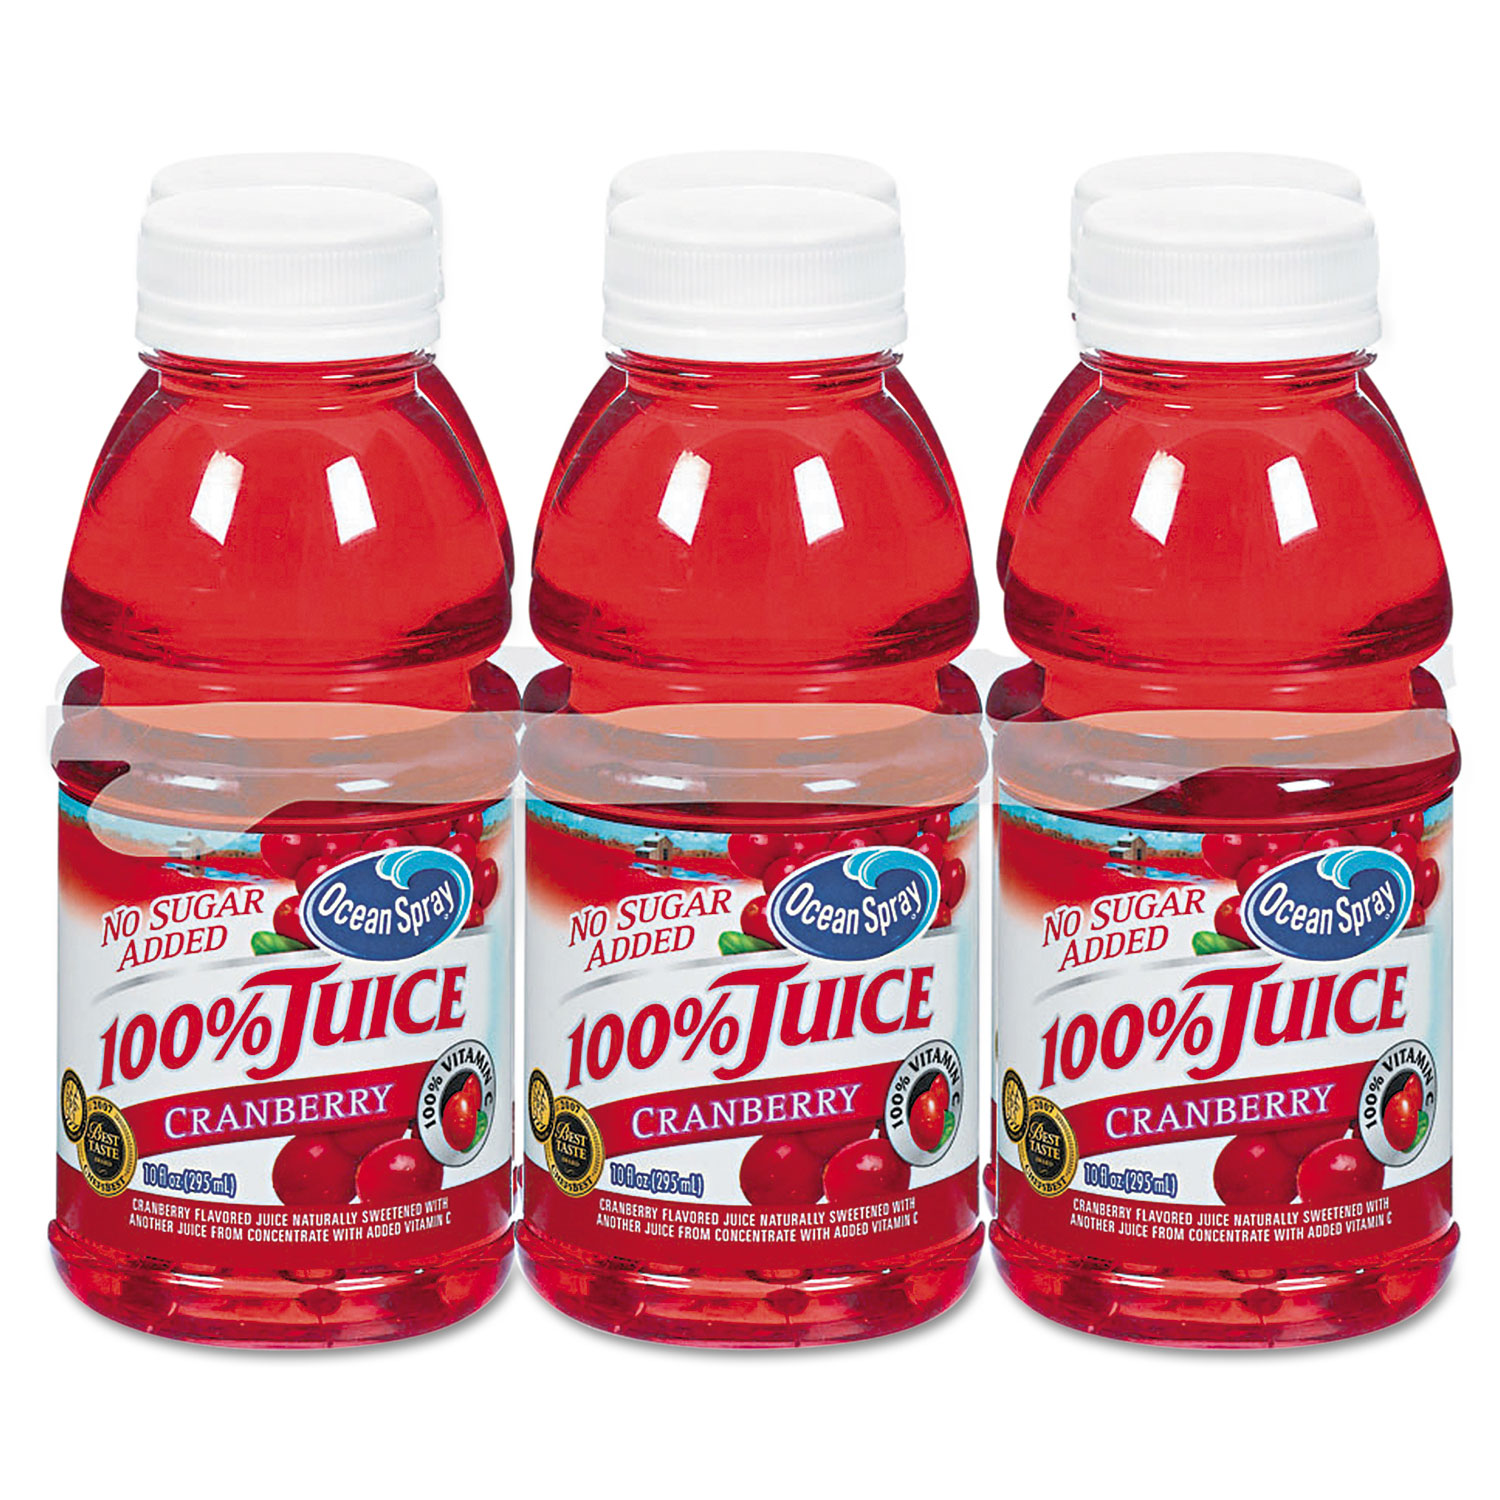  Ocean Spray OCE00066 100% Juice, Cranberry, 10oz Bottle, 6/Pack (OCS00066) 